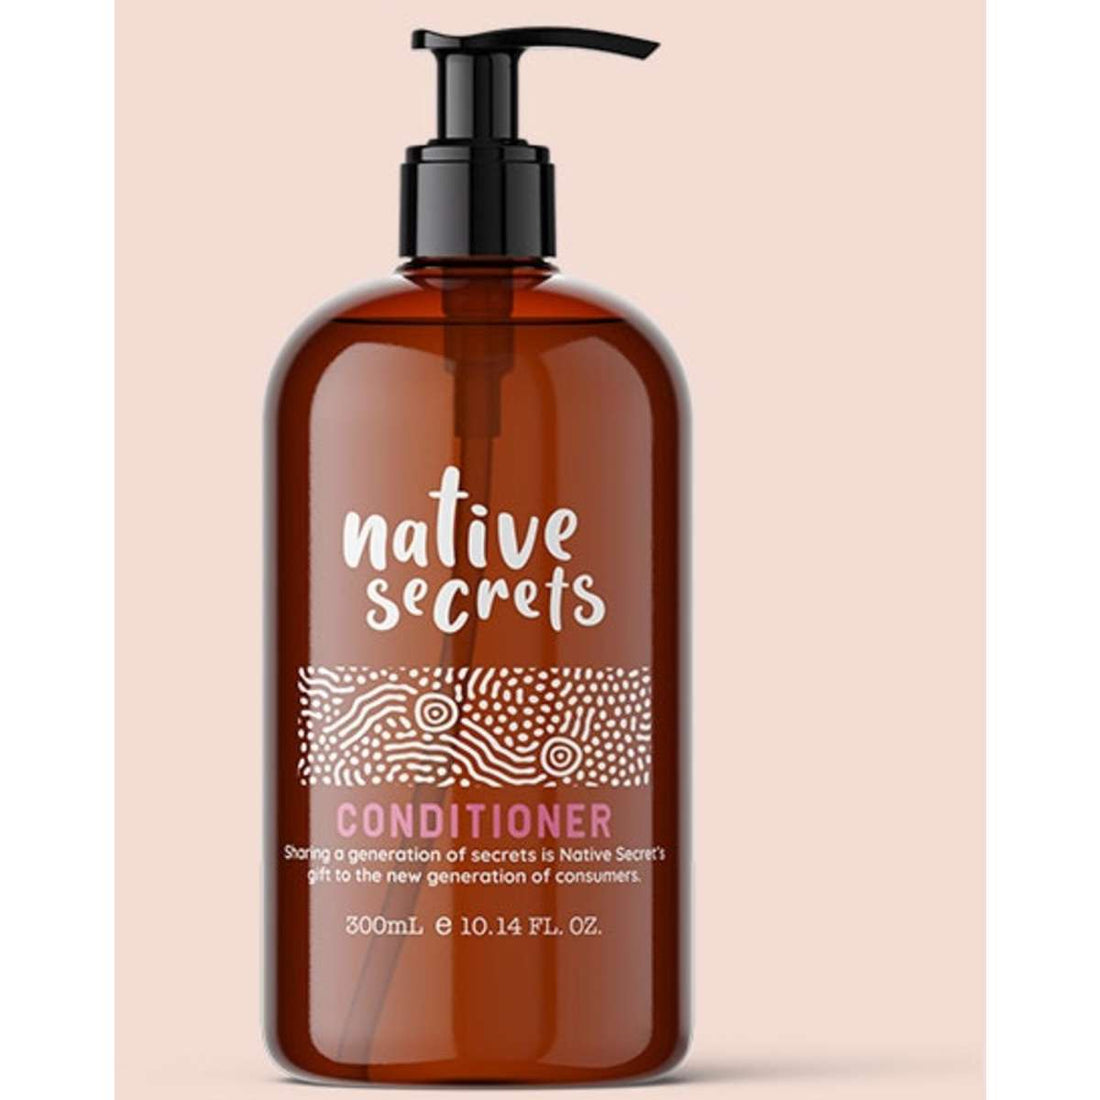 Native Secrets Australian Made Shampoo and Conditioner 300ml - 2 Pack